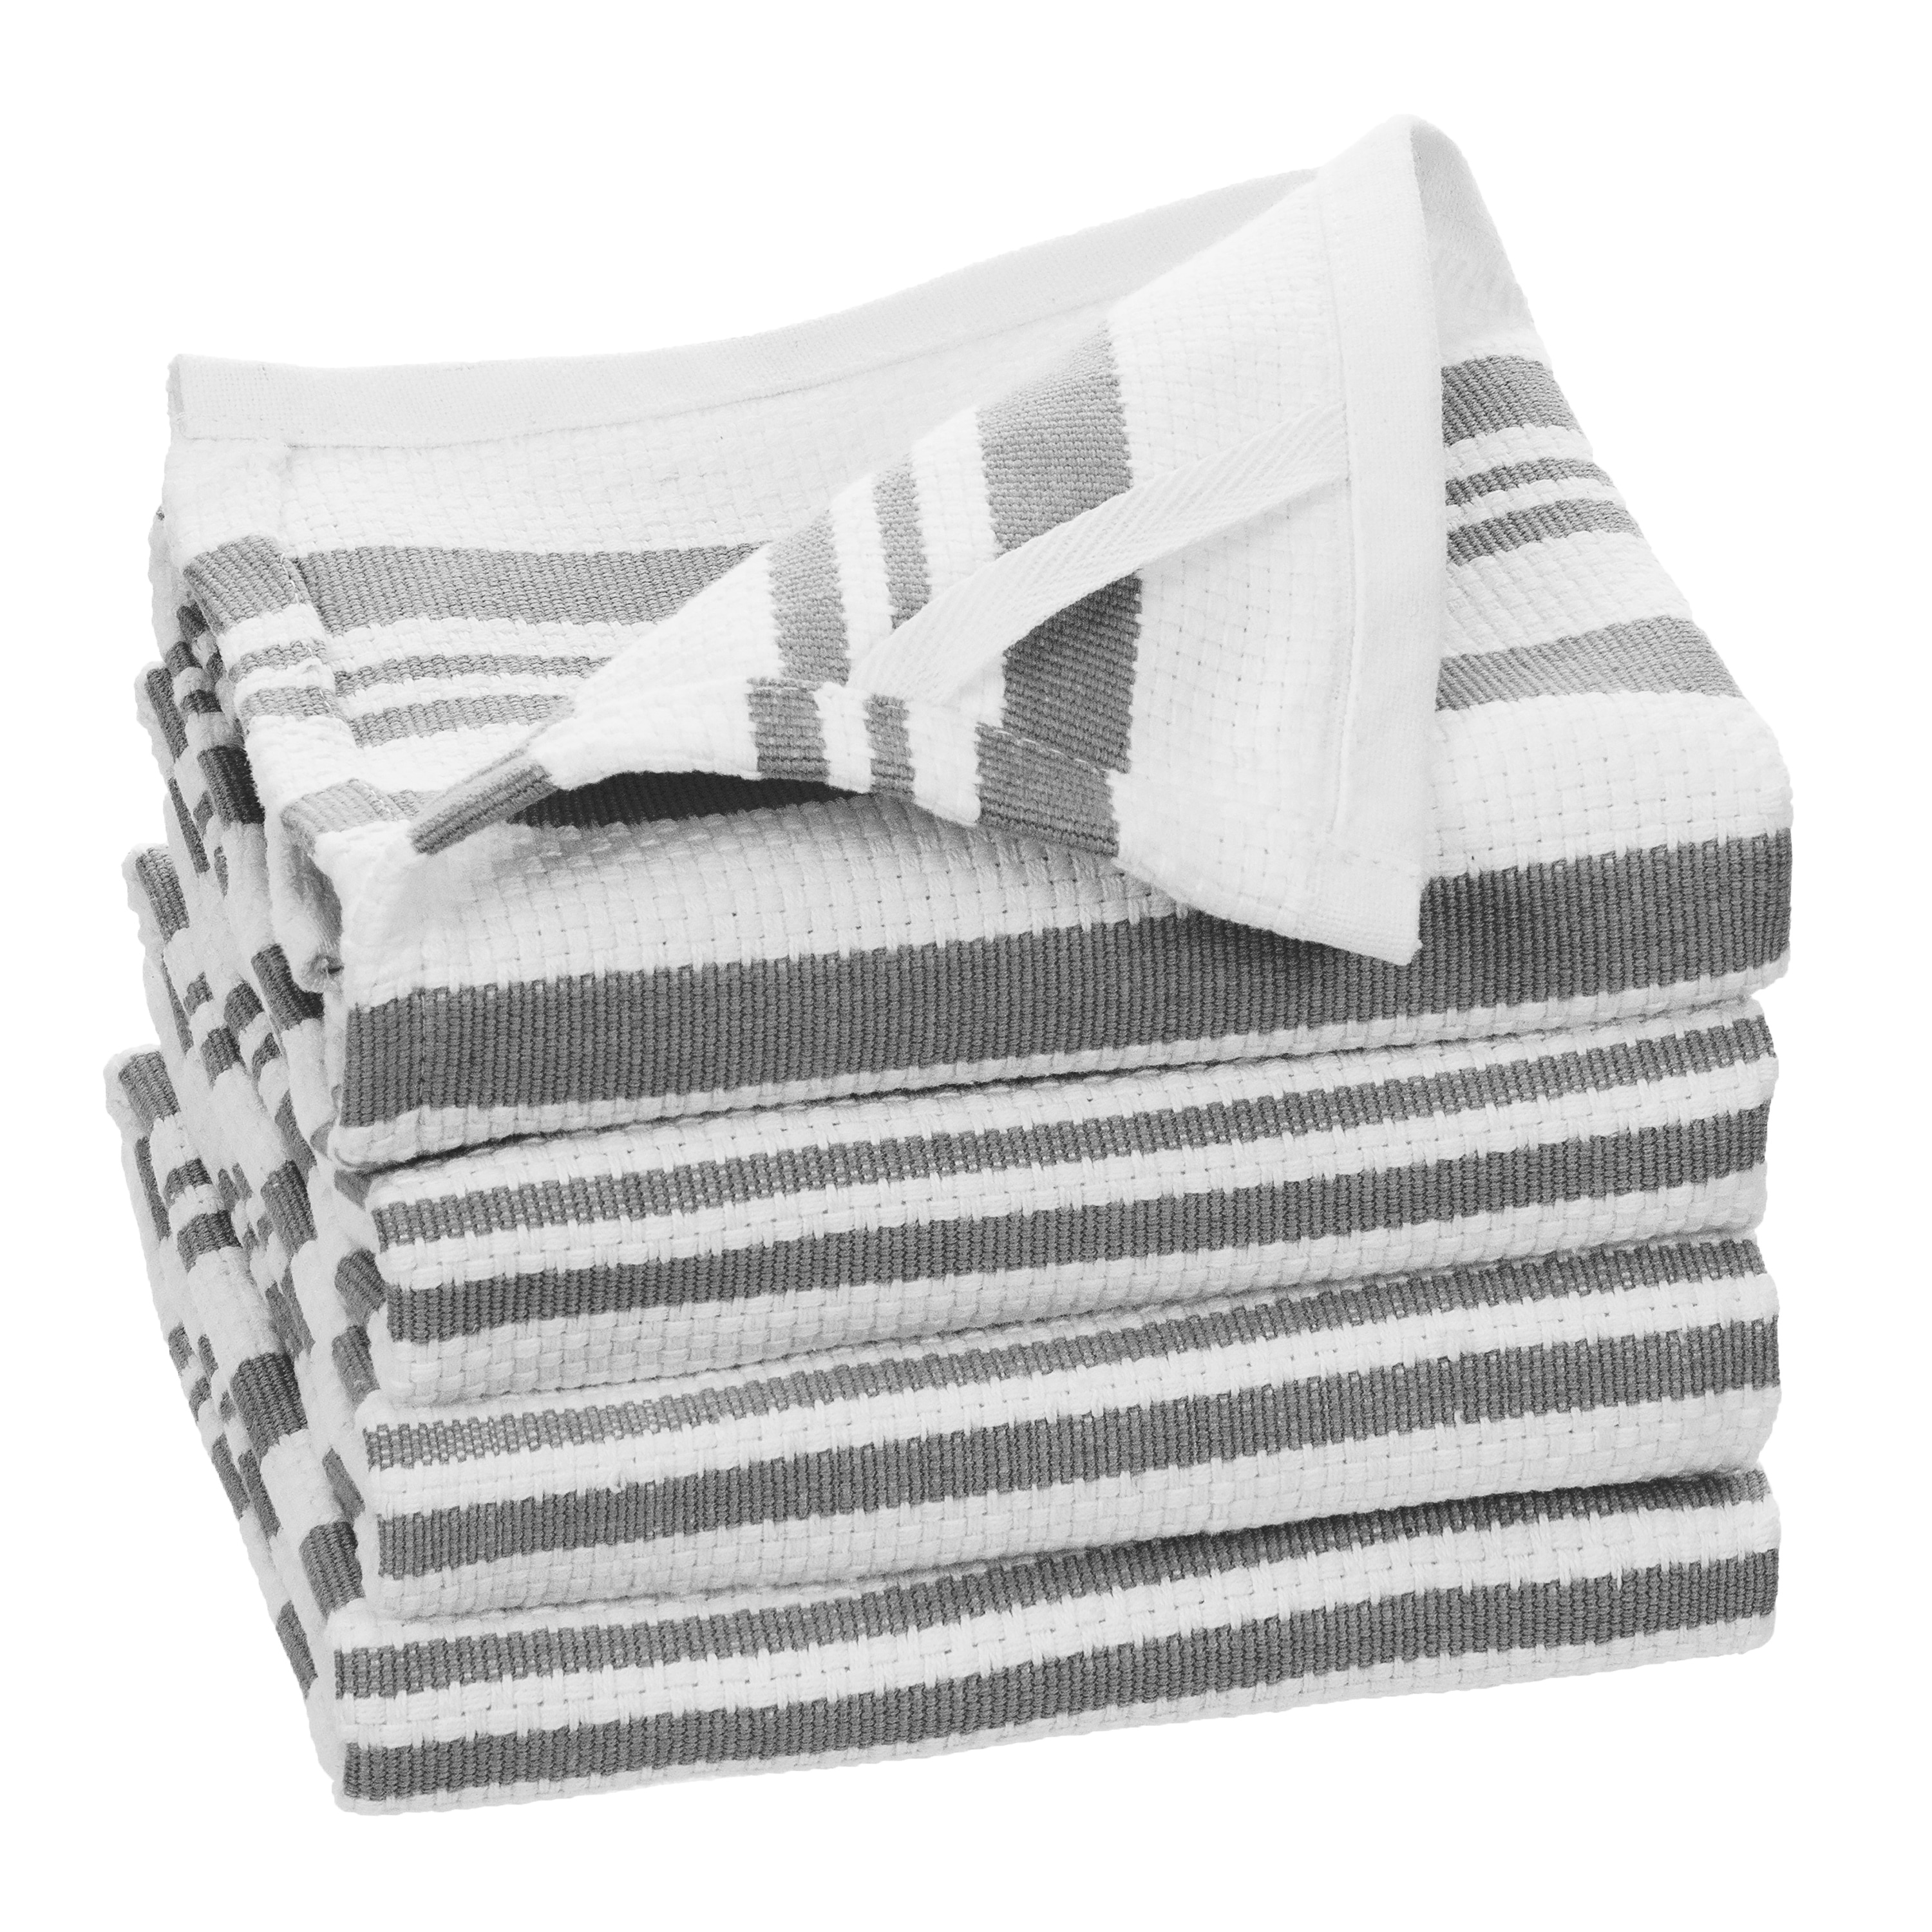 2-PK New KitchenAid Absorbent Cotton Terry Kitchen Towels Stripes